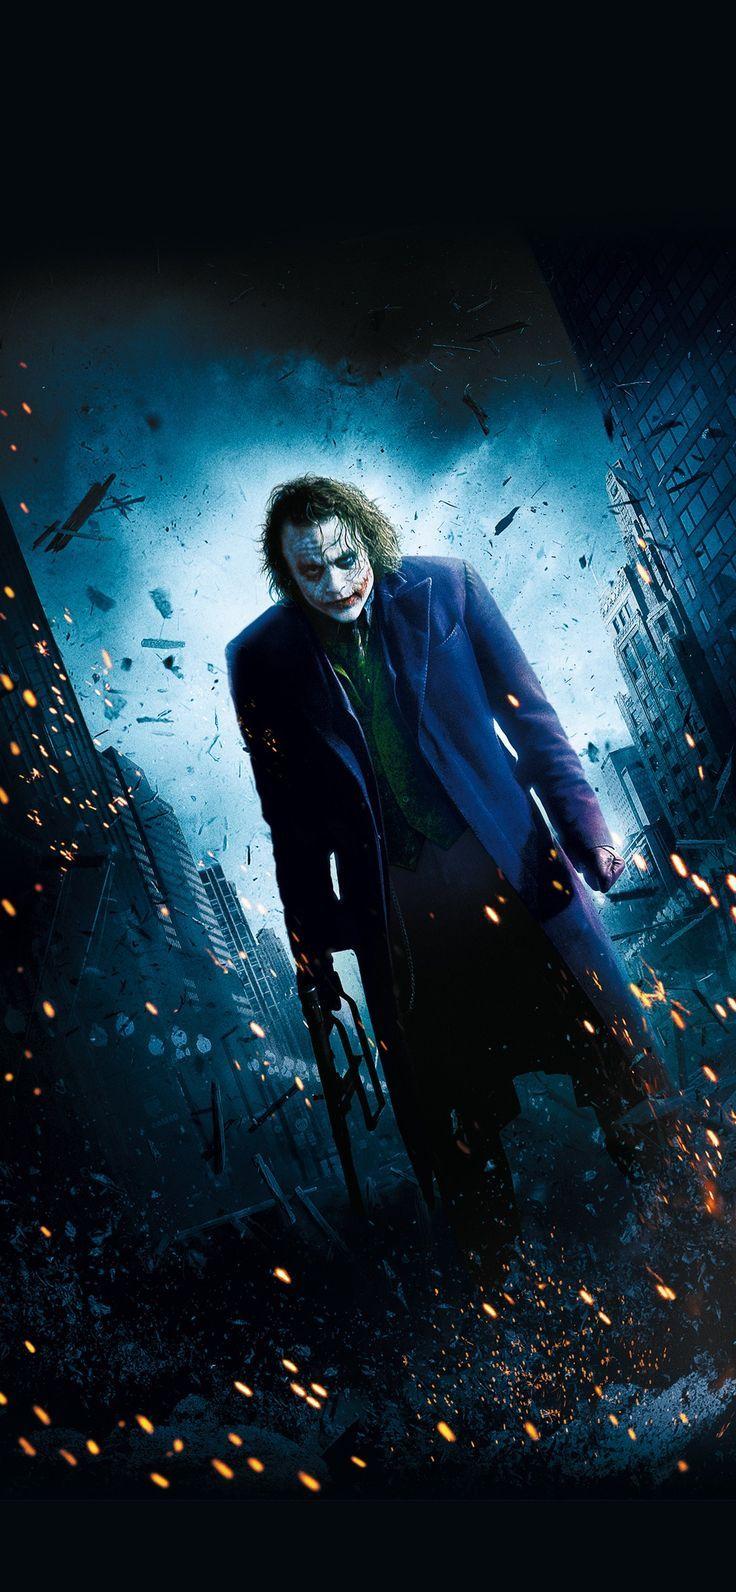 Joker Wallpaper For iPhone Igeeks Heath Ledger